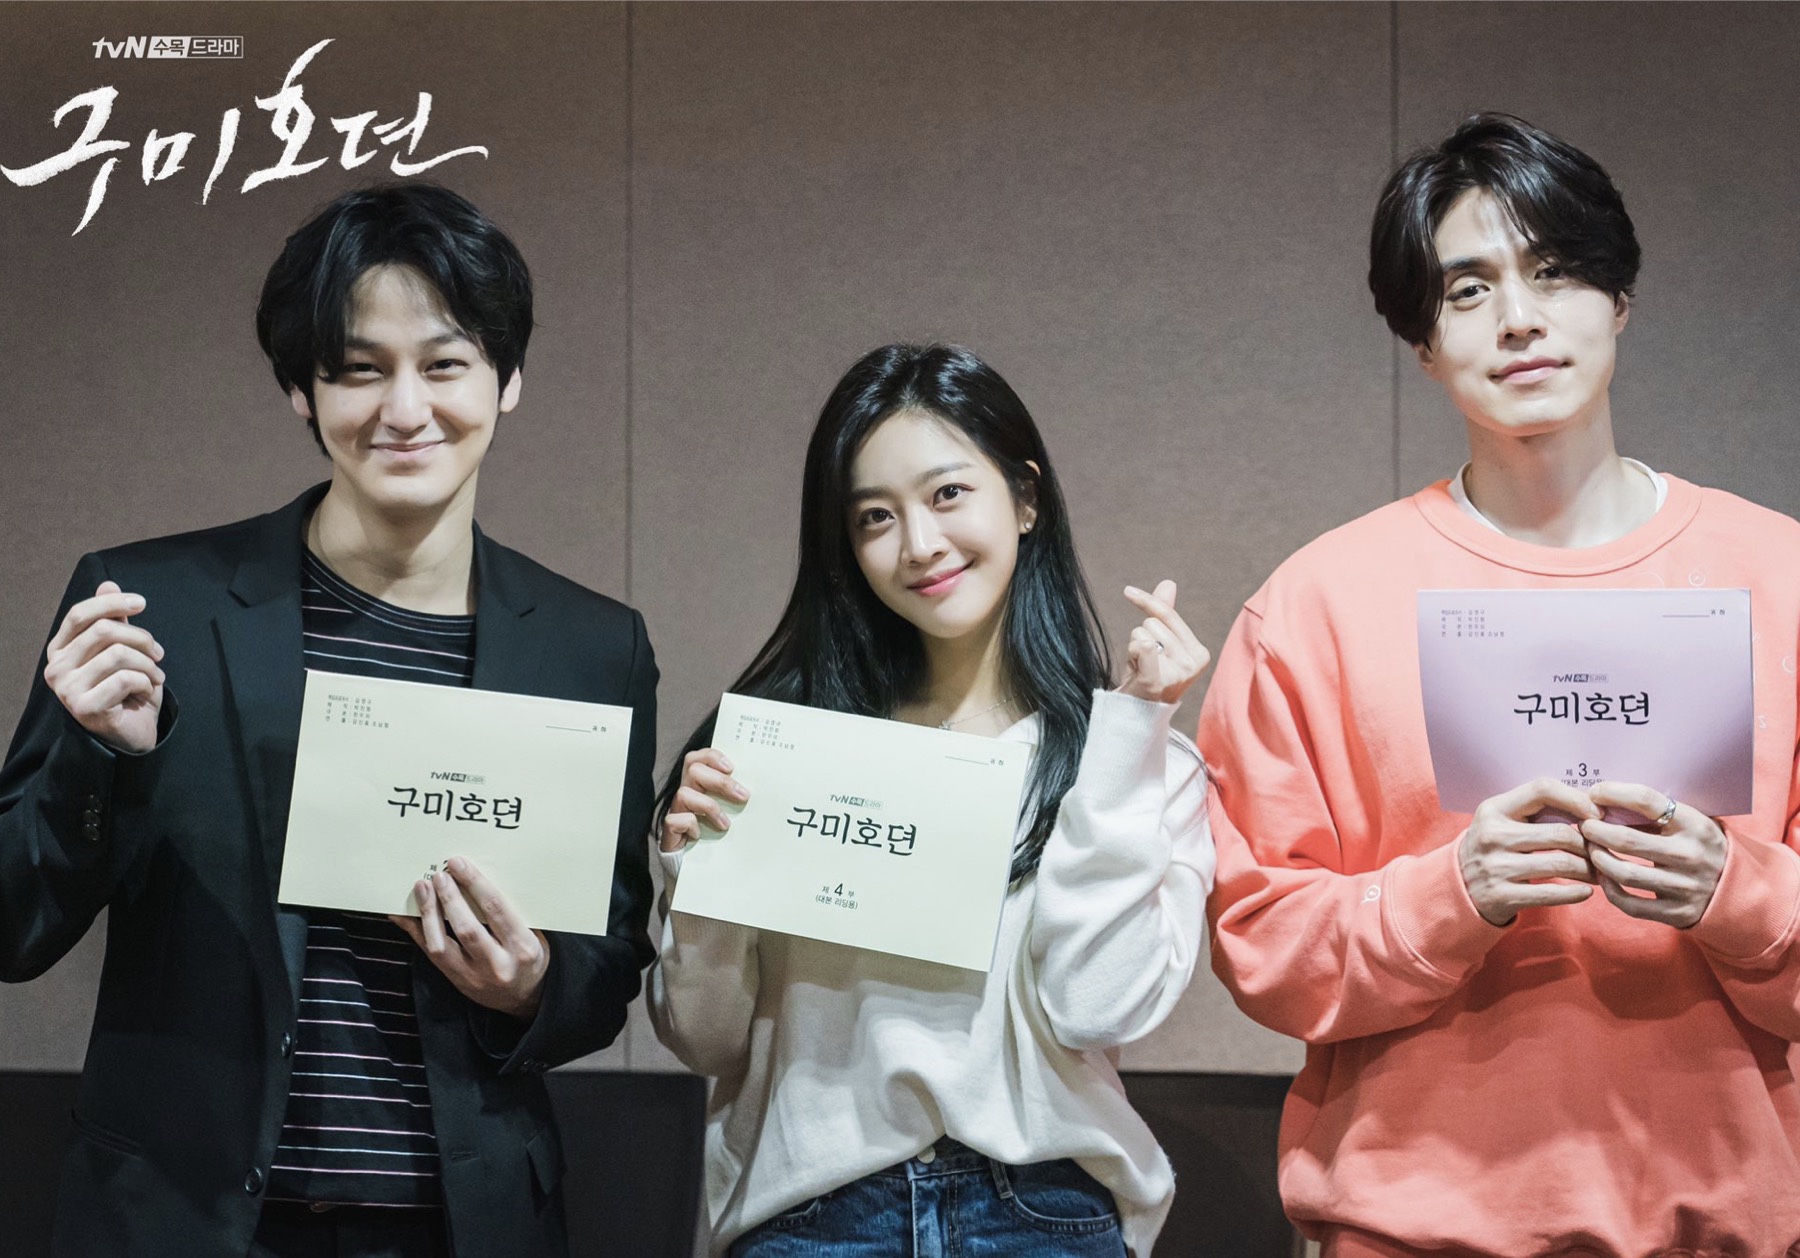 tvN release script reading for upcoming fantasy drama